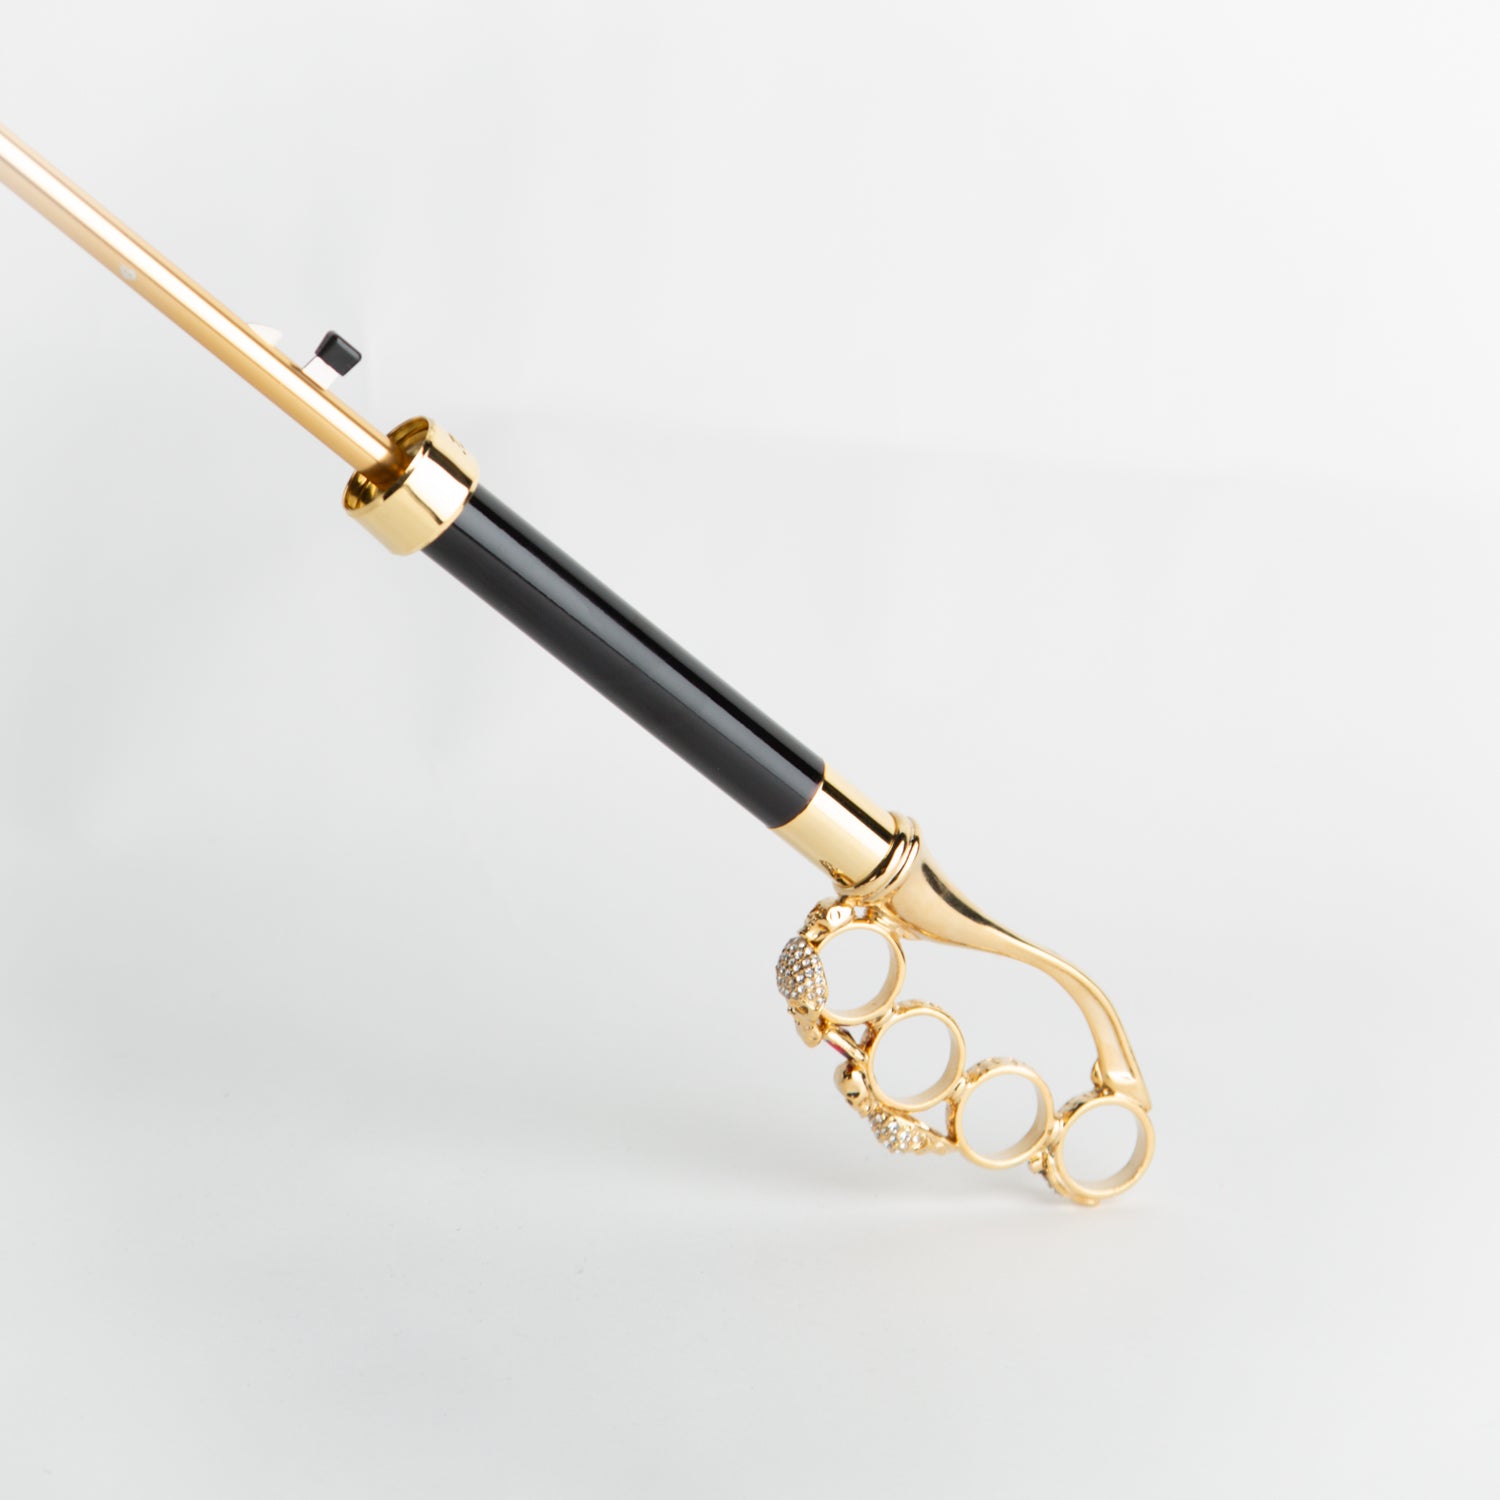 black umbrella with golden skull knuckleduster handle